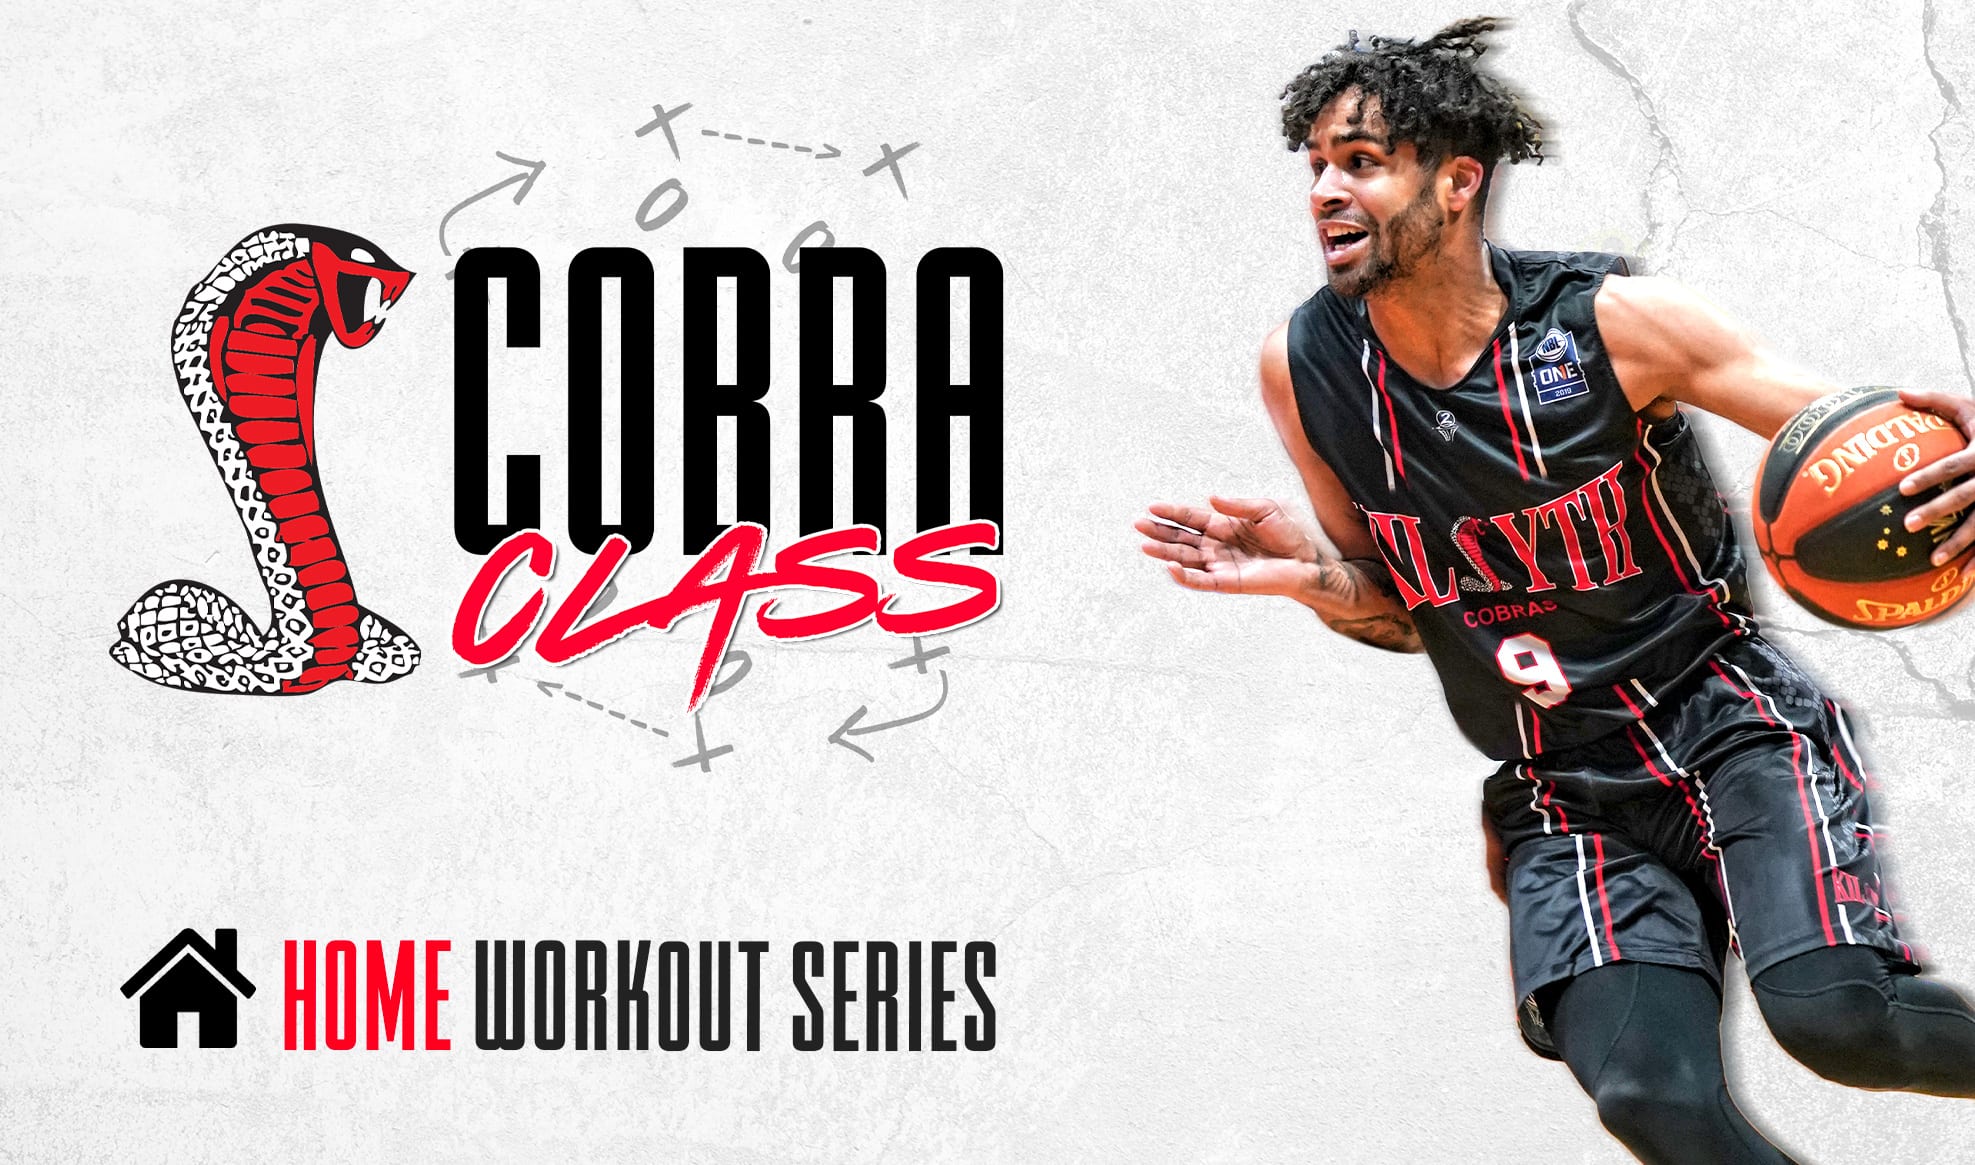 Cobra Basketball 